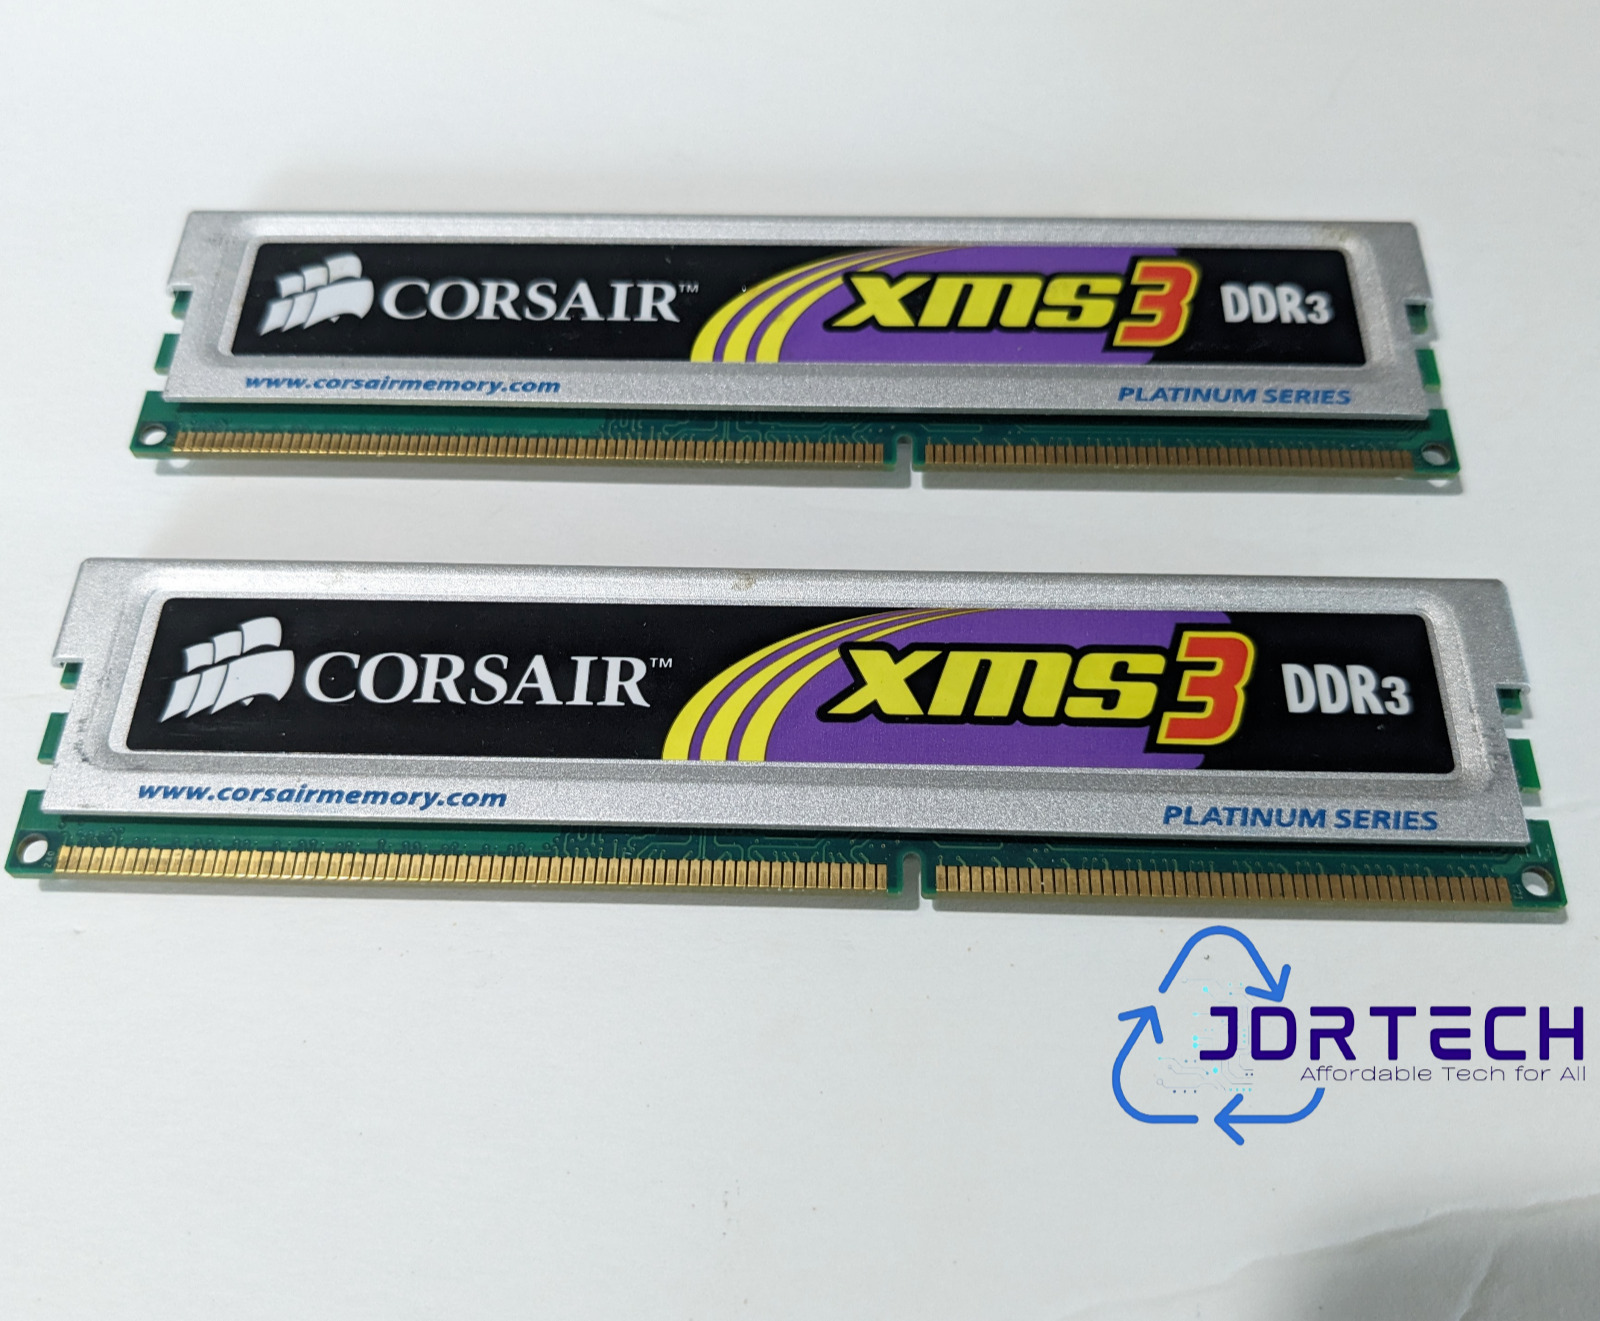 CORSAIR 4 GB DDR3 Heatsink Desktop RAM Kit (2x2 GB, 1333 MHz, CM3X2G1333C9)